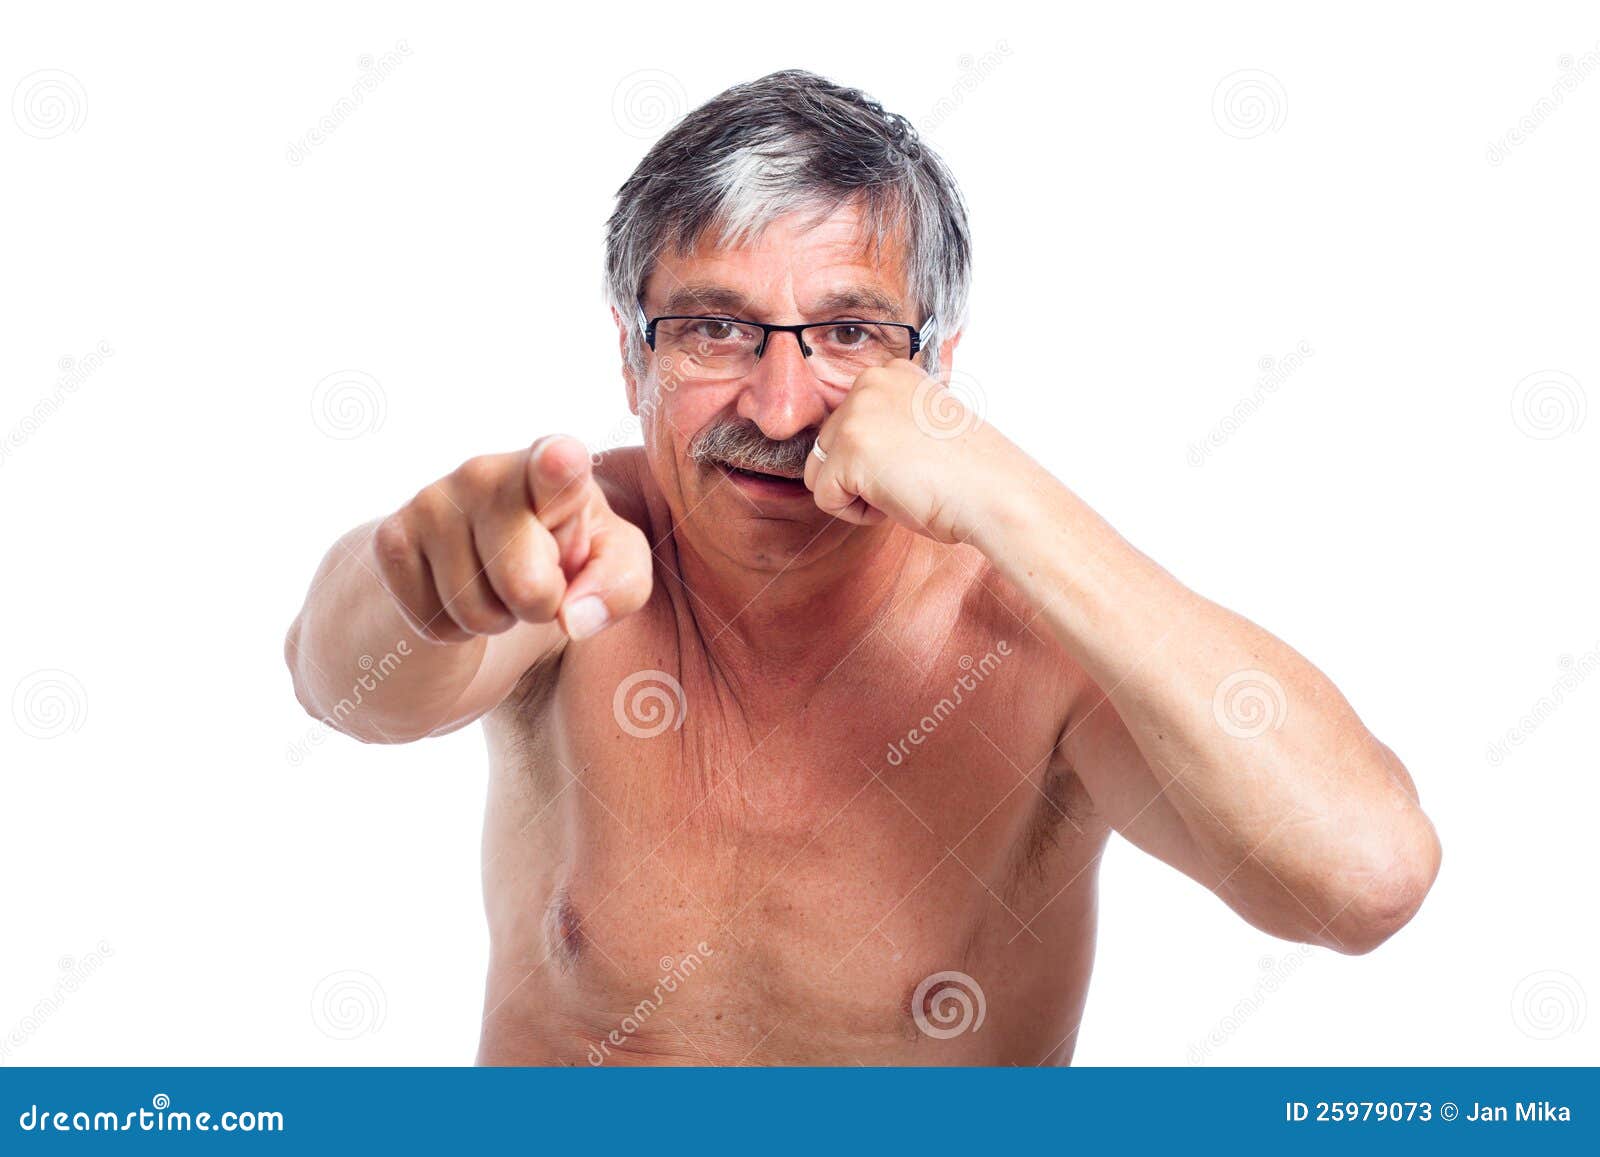 Aggressive Senior Man Stock Photos - Image: 25979073